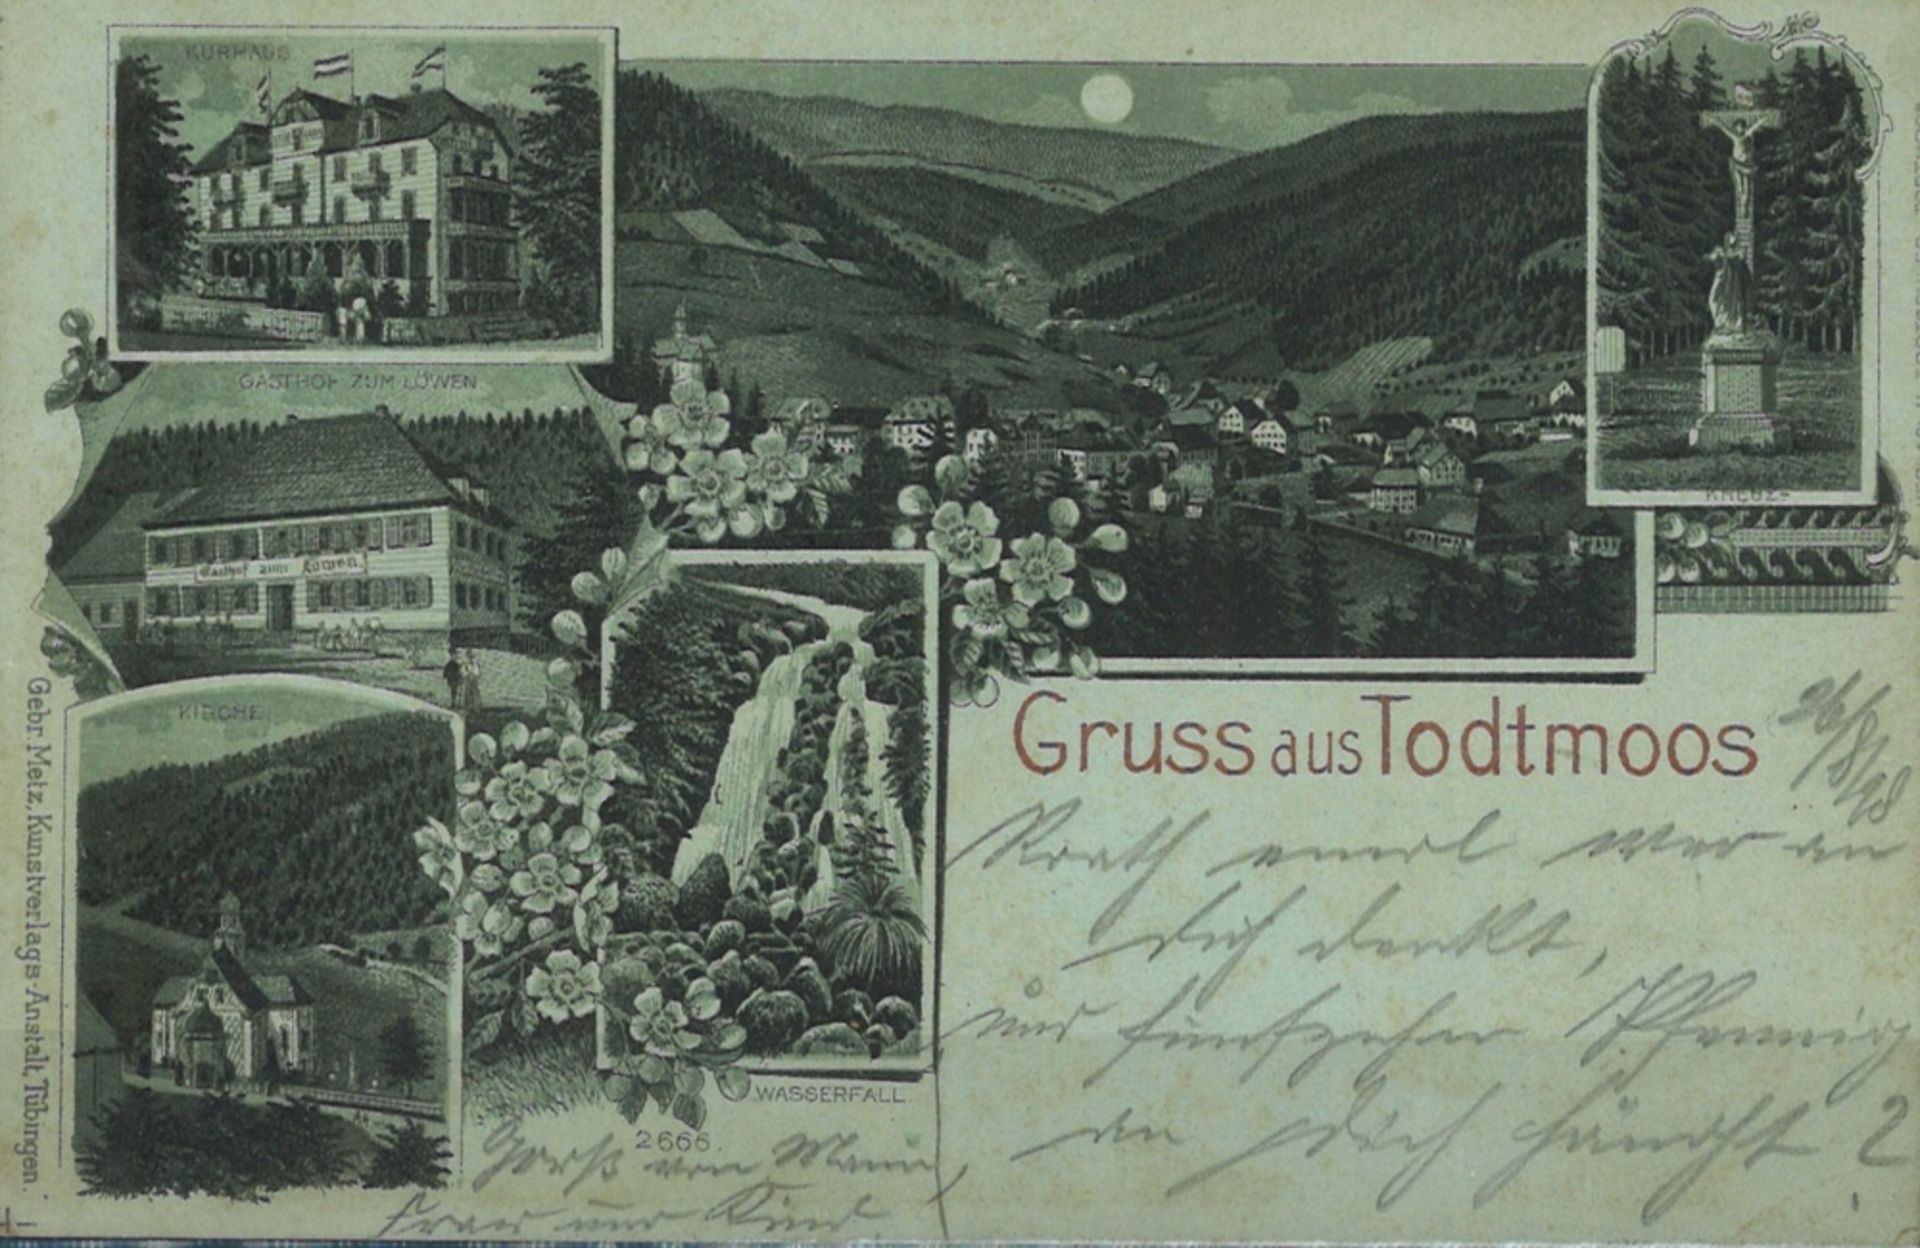 Postkarte "Gruss aus Todtmoos" Kunstverlag Tübingen, gelaufen